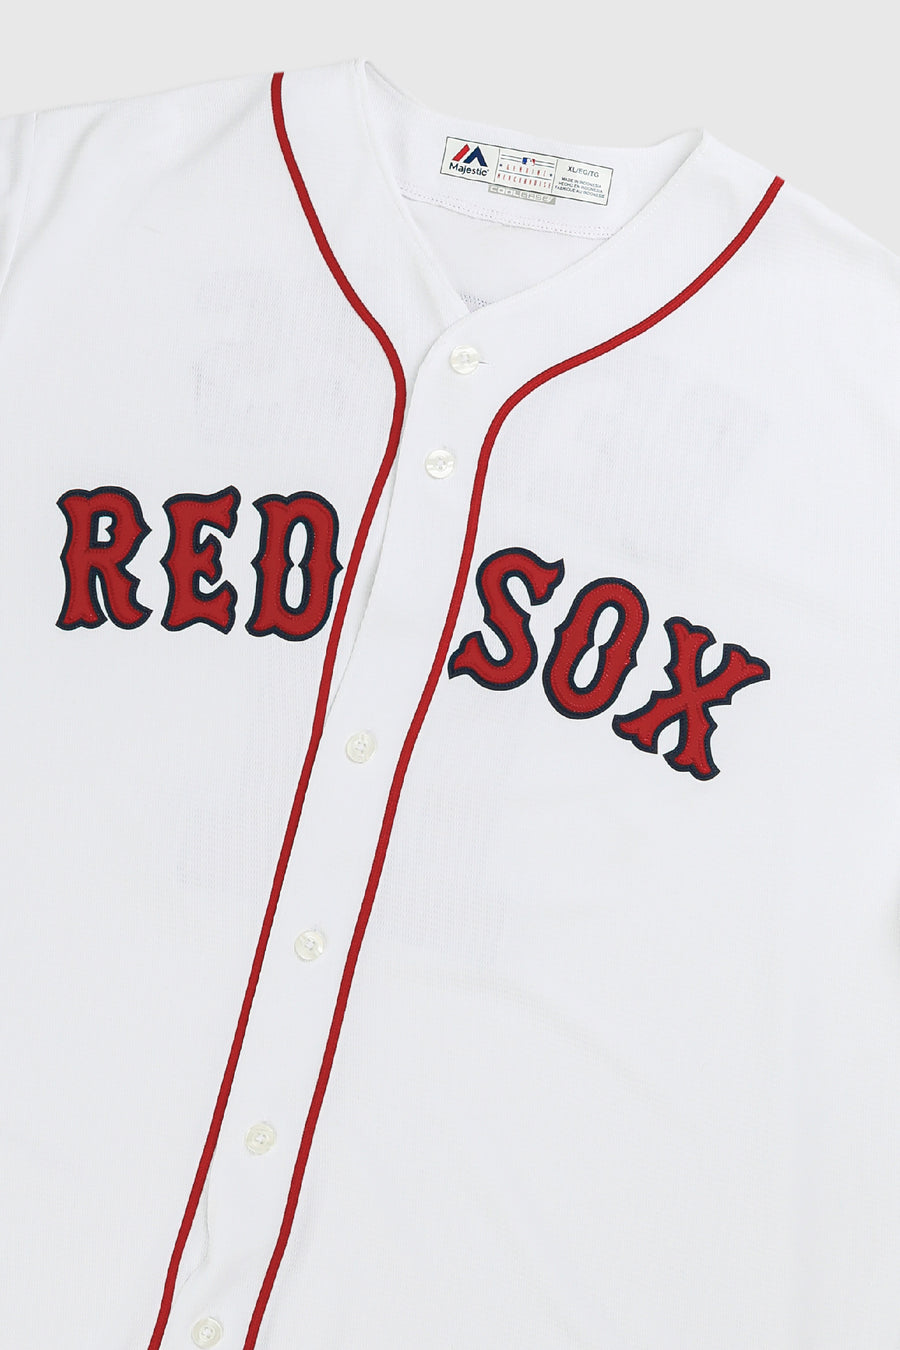 Vintage Red Sox MLB Baseball Jersey